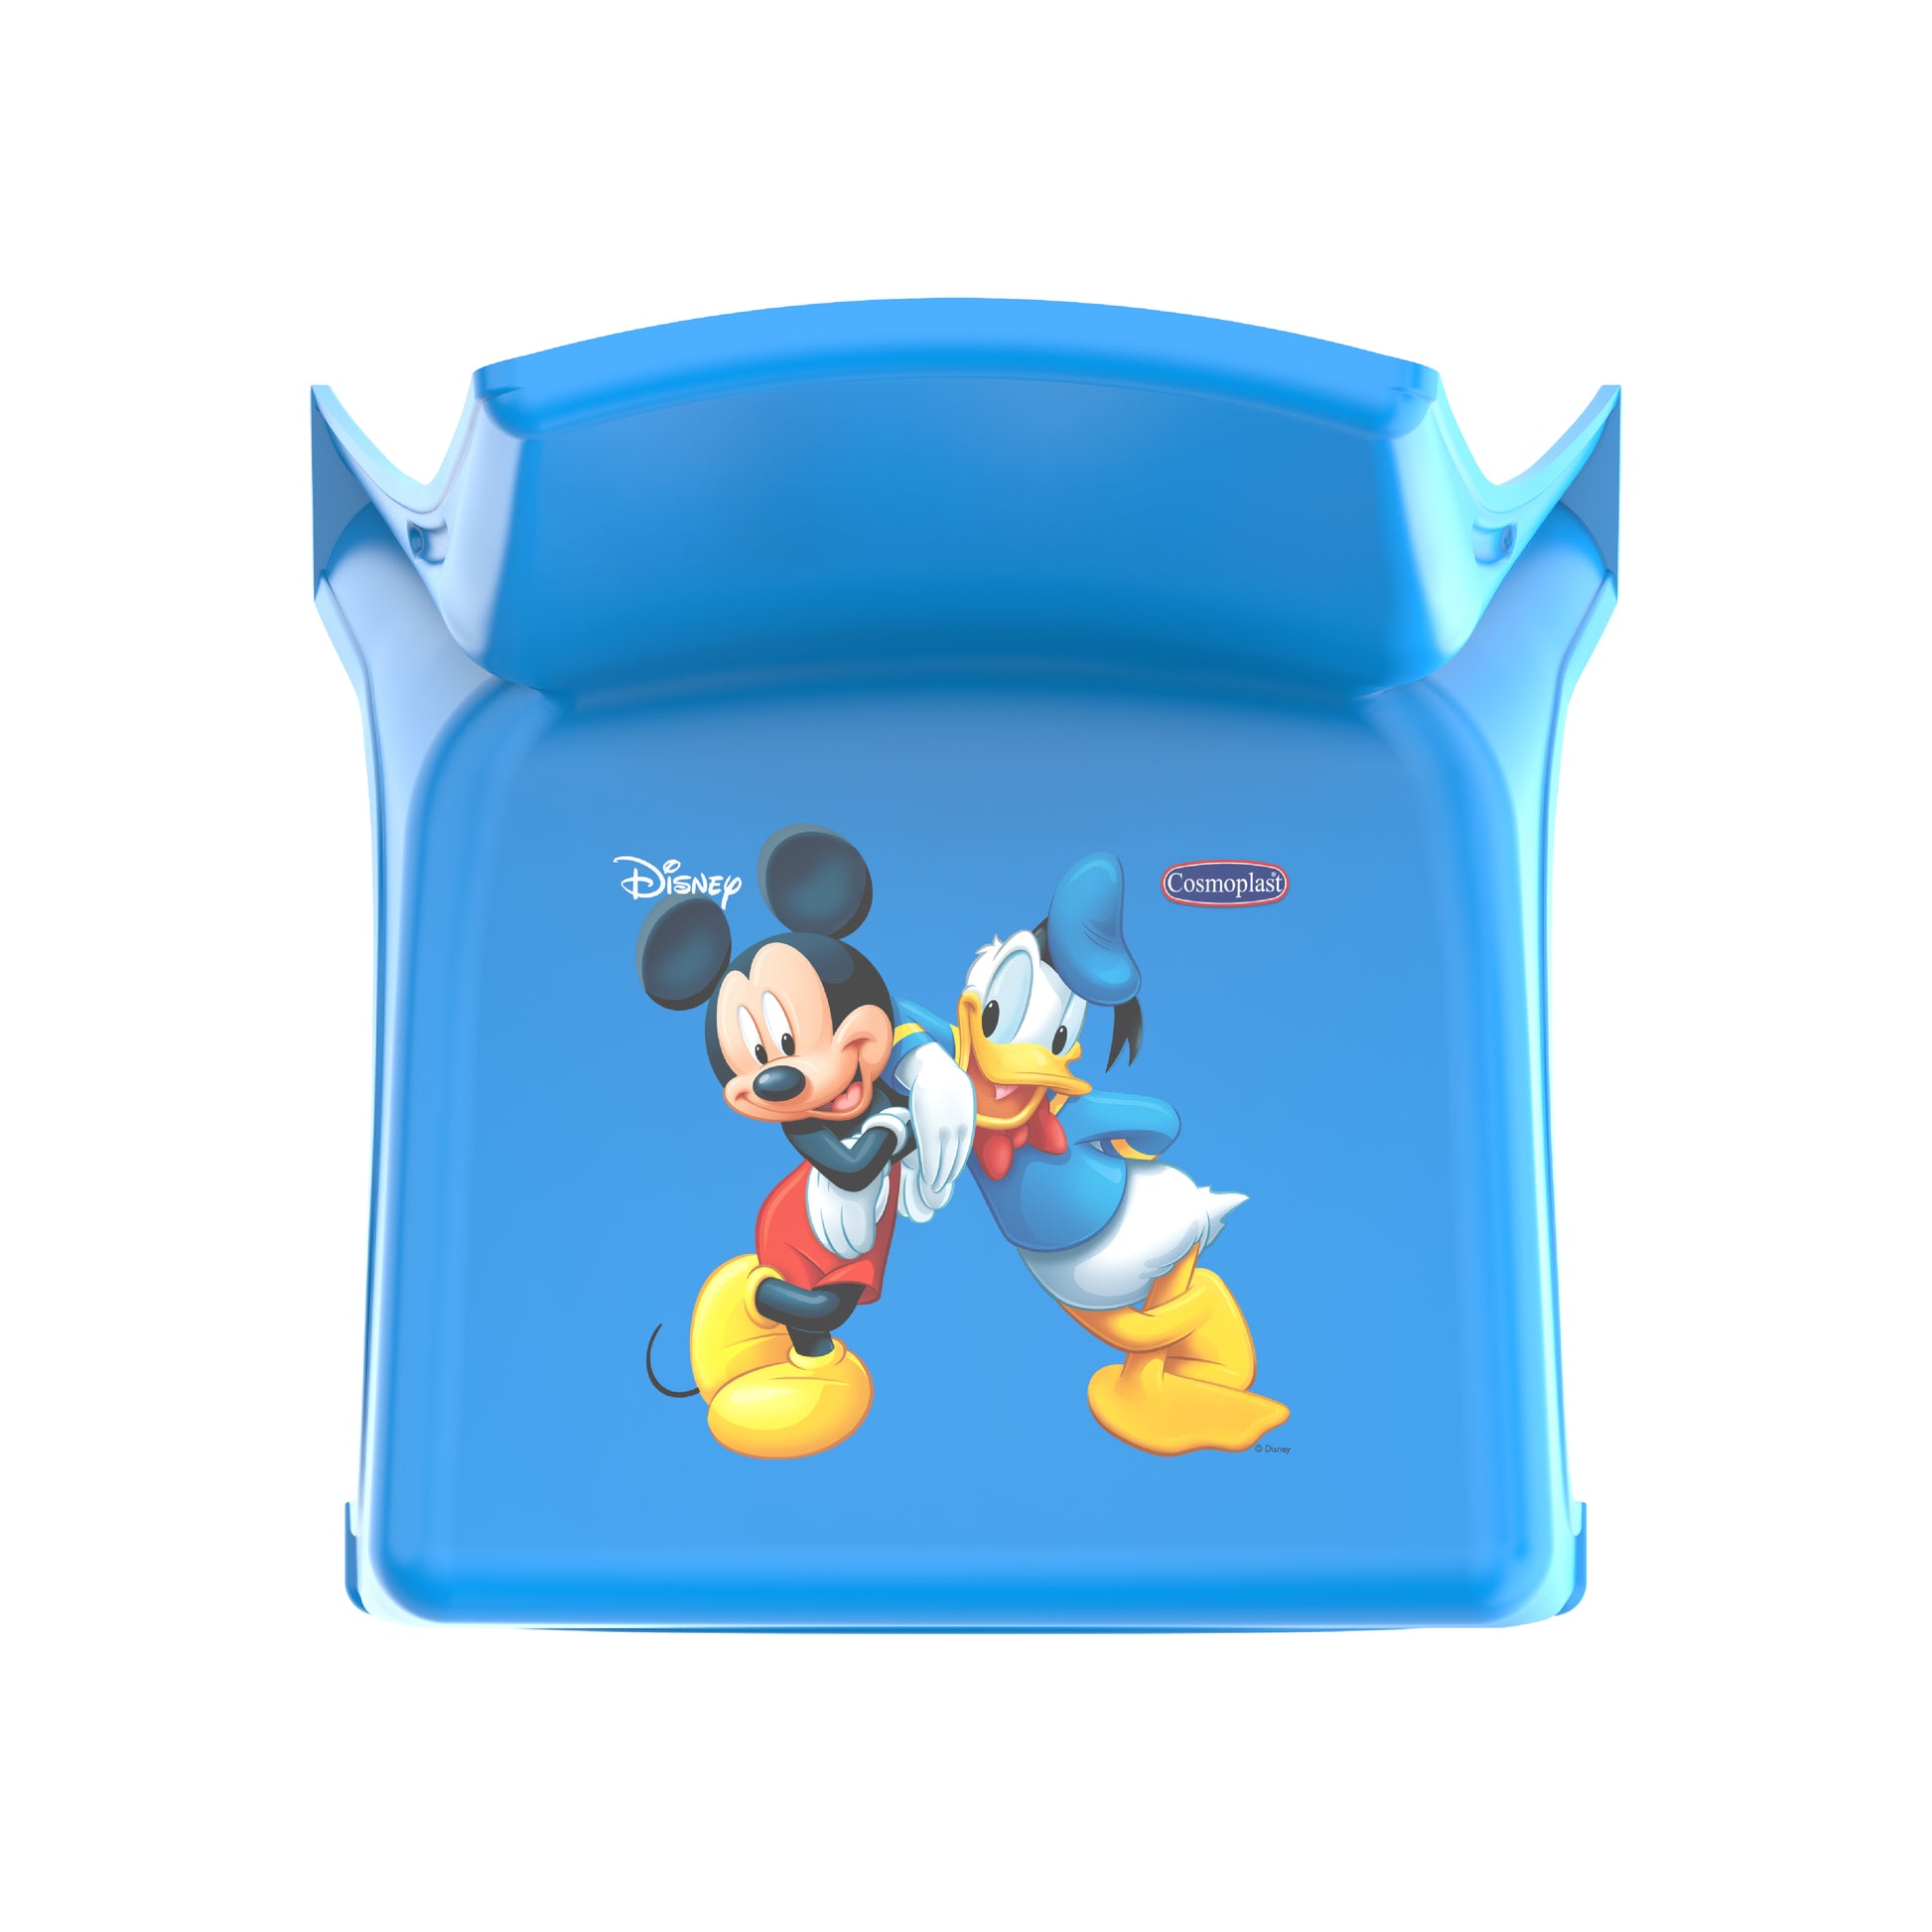 Cosmoplast Disney Mickey & Friends Boys Plastic Baby Chair